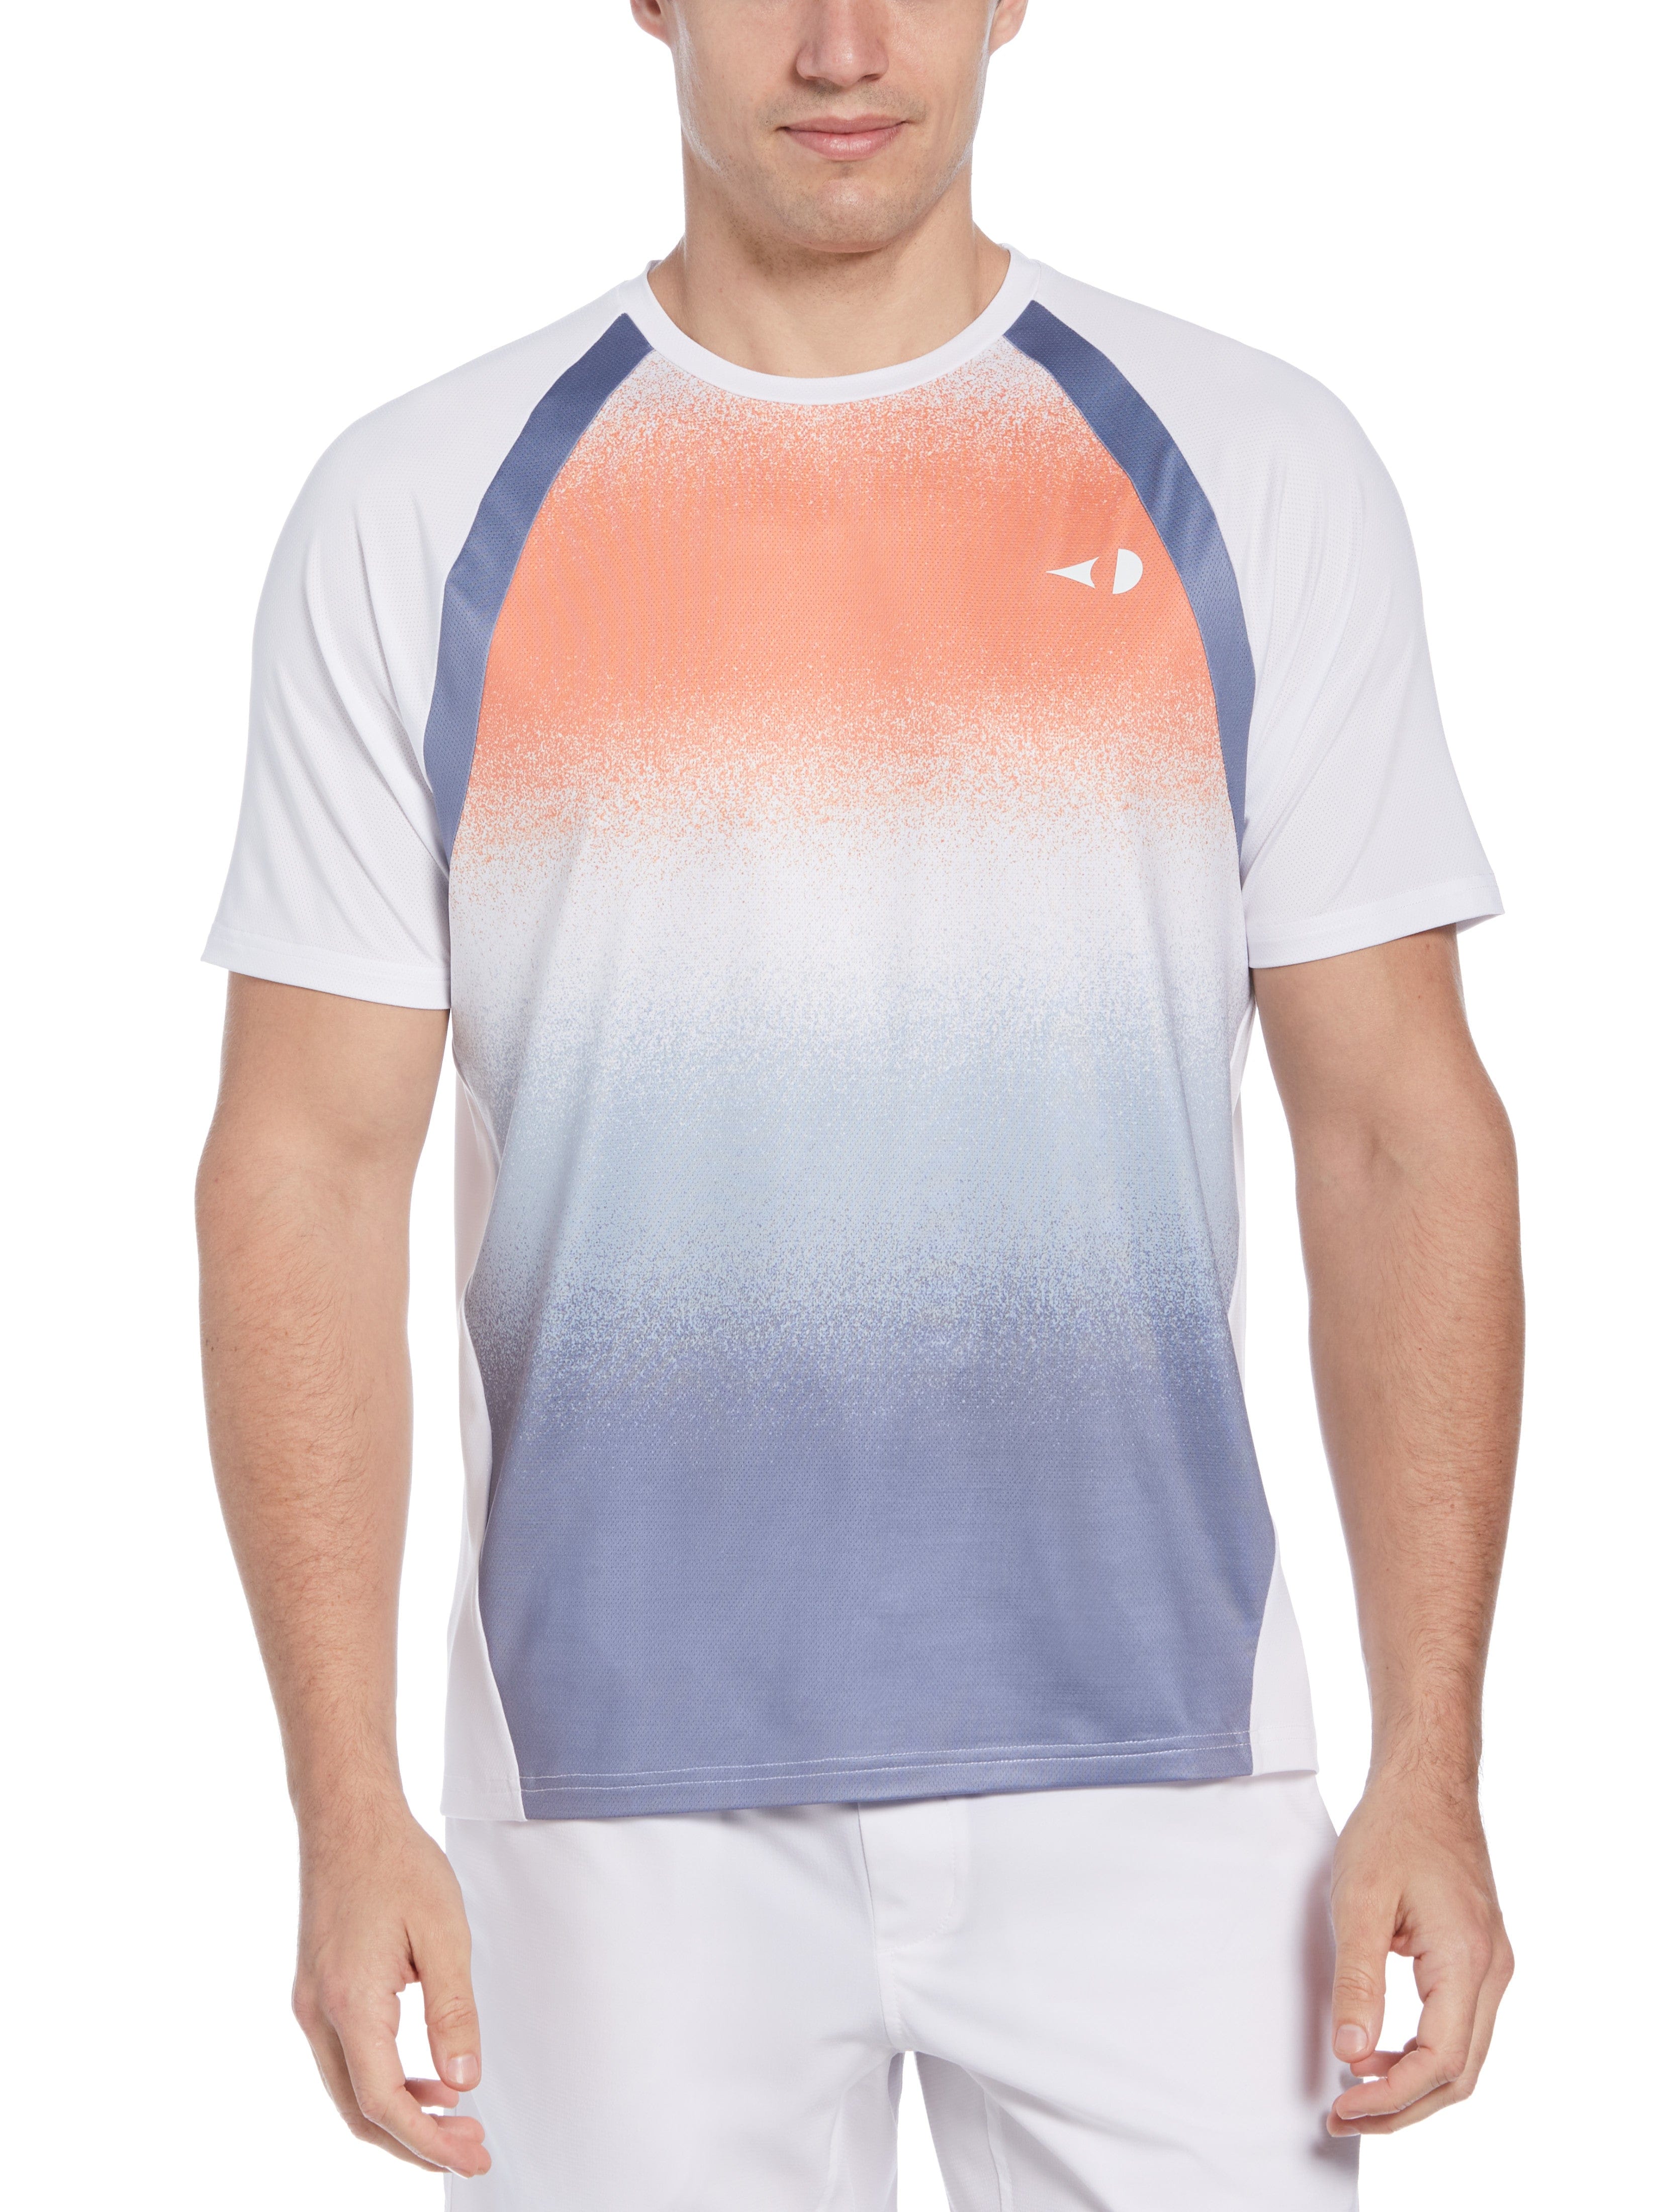 Grand Slam Mens Spray Gradient Printed Tennis T-Shirt, Size Medium, Bright Wh/Candied Yams White, Polyester/Spandex | Golf Apparel Shop